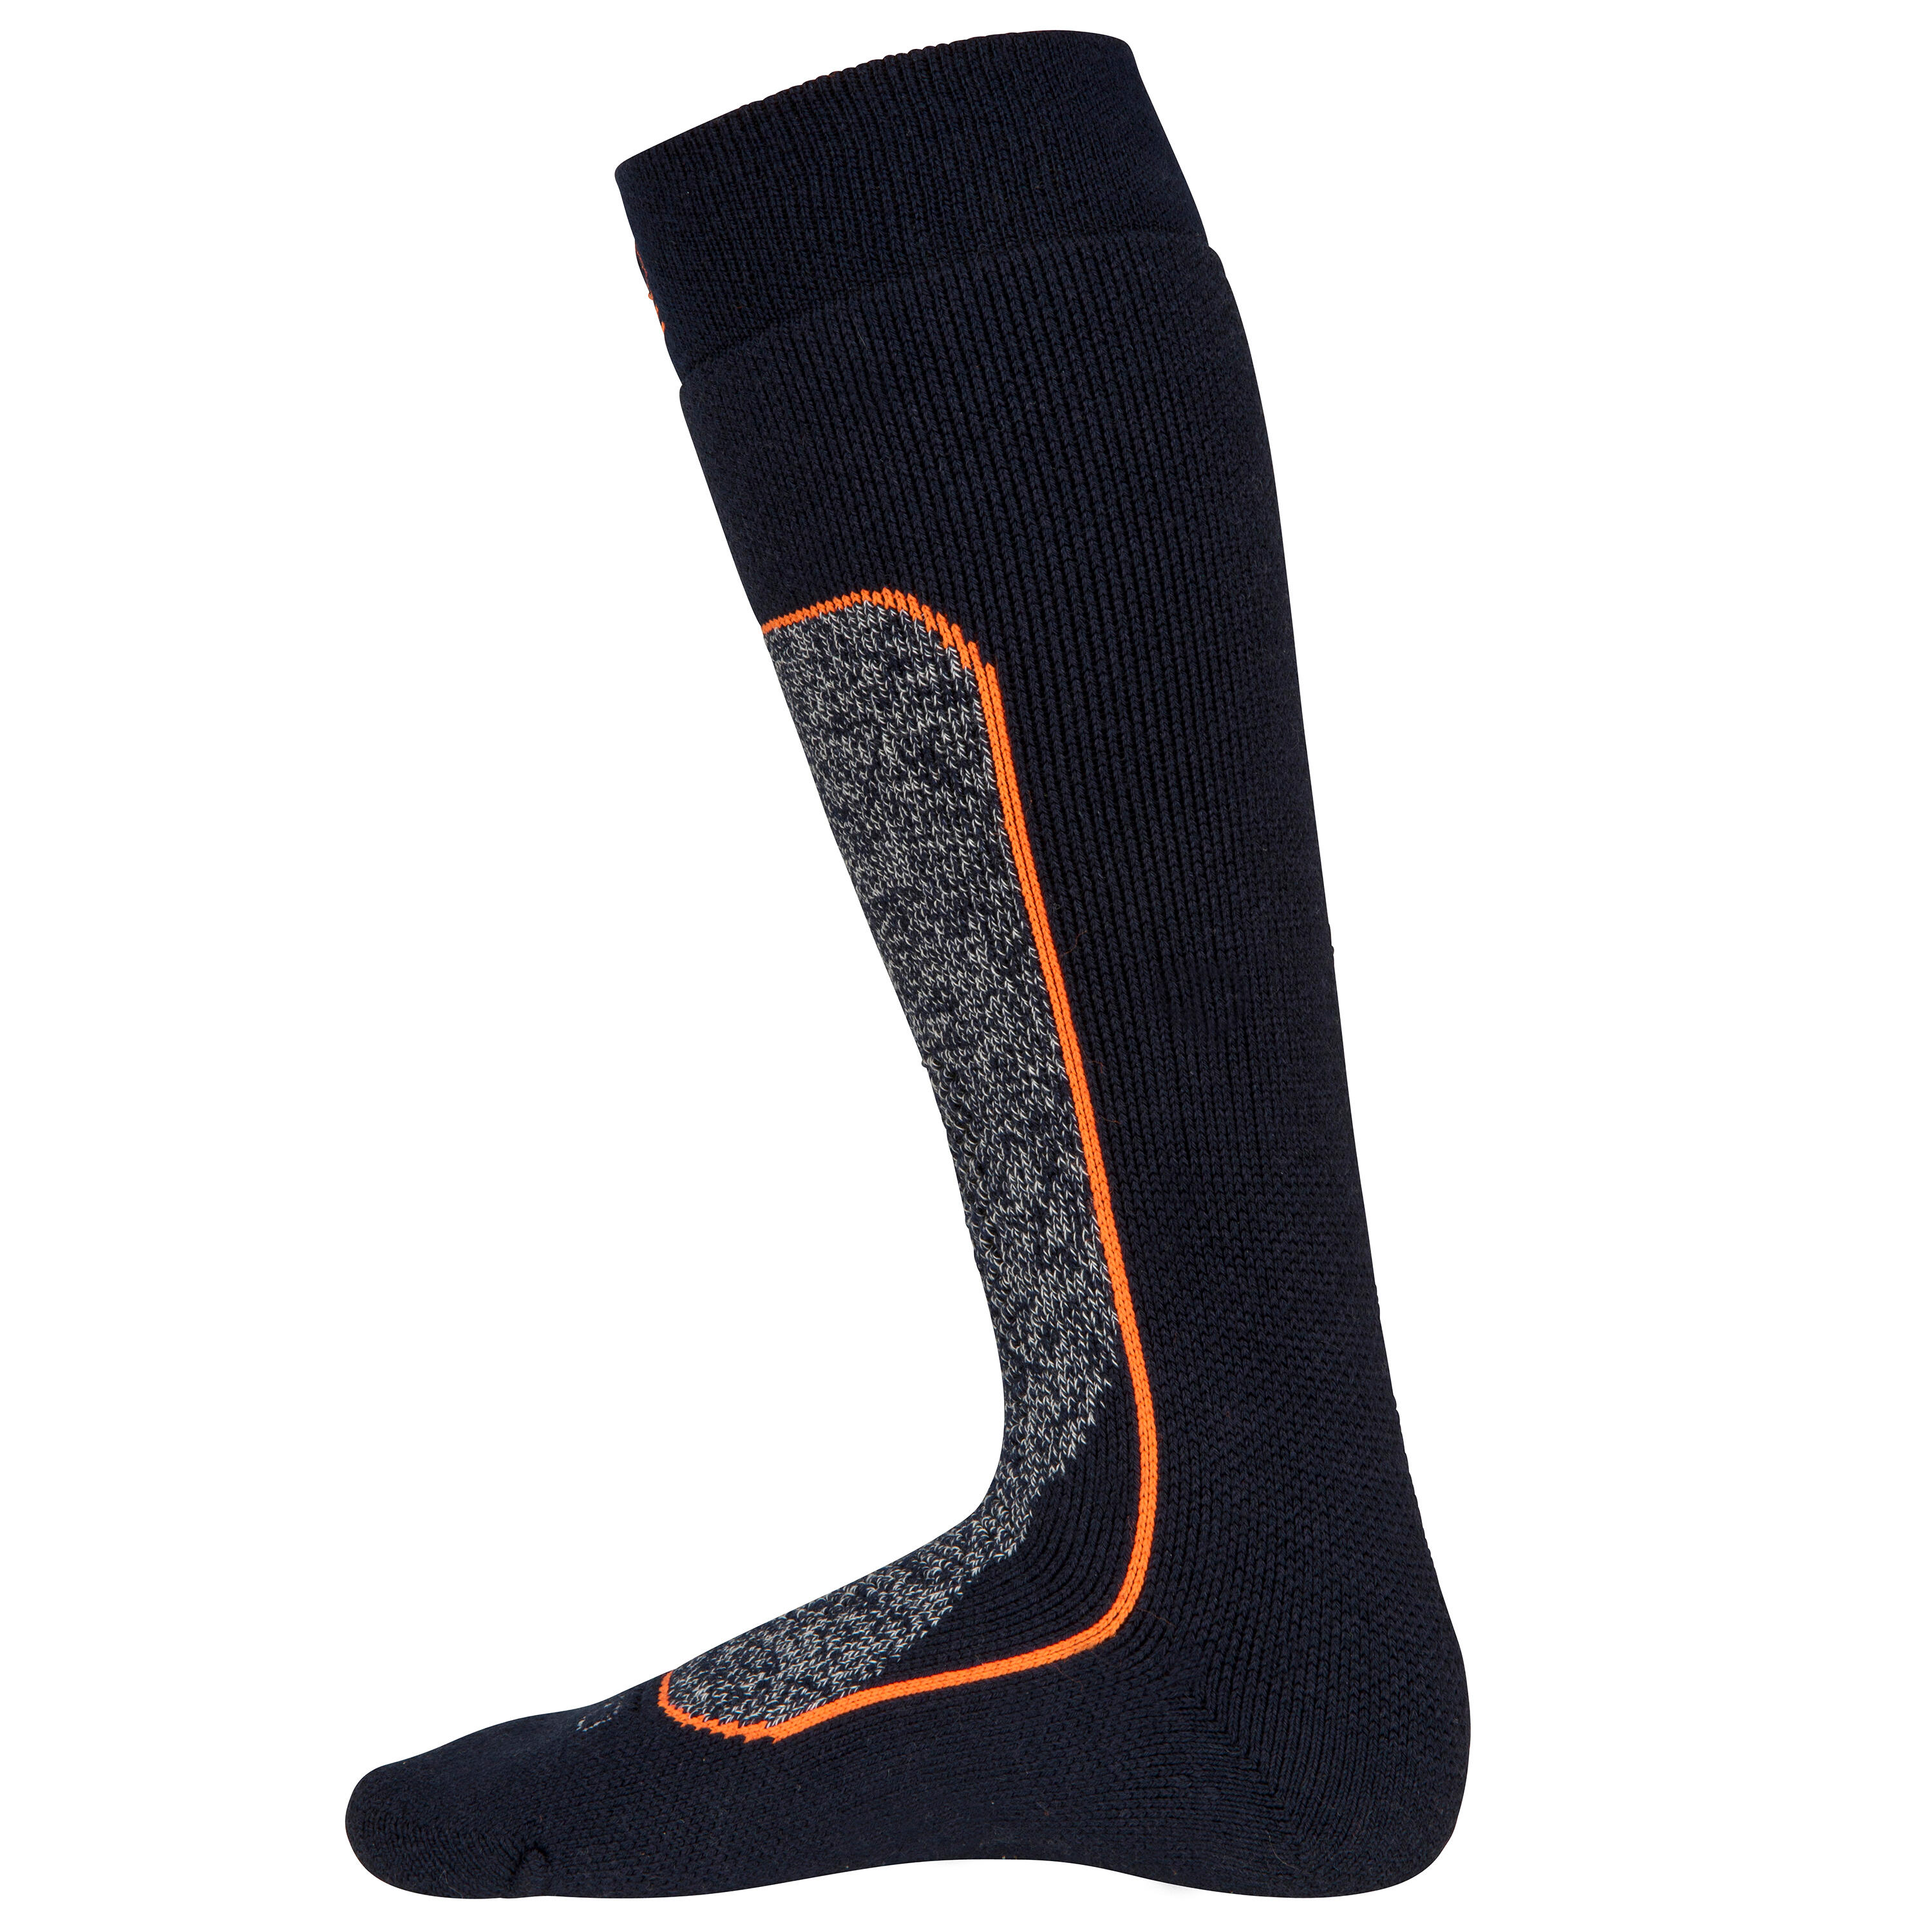 Adults’ Warm Sailing trouser socks 500 4/4